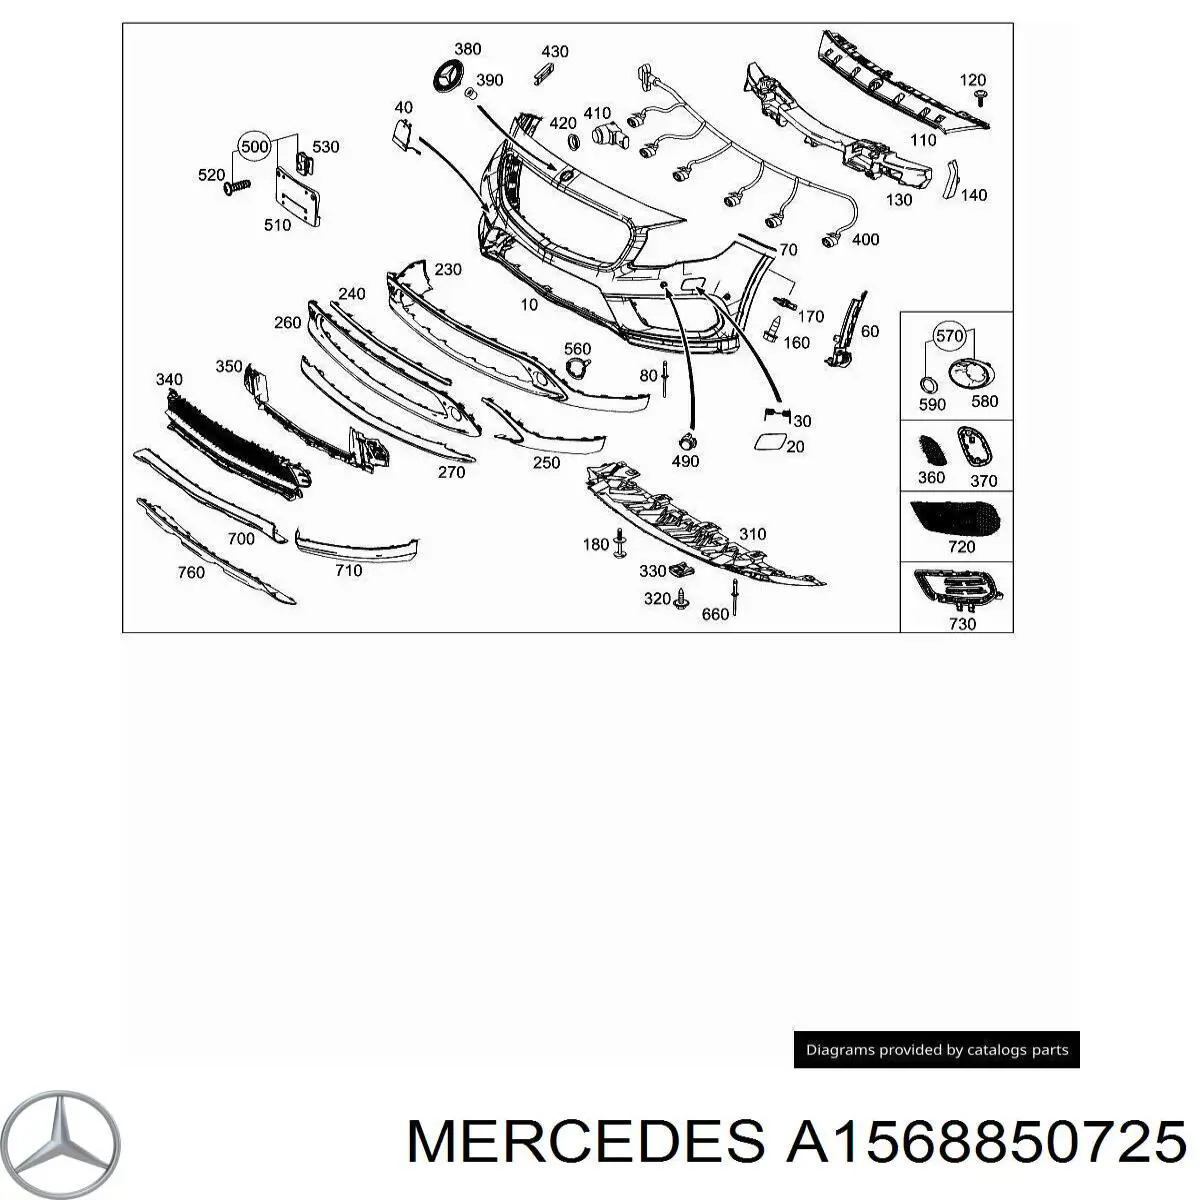 1568850725 Mercedes 